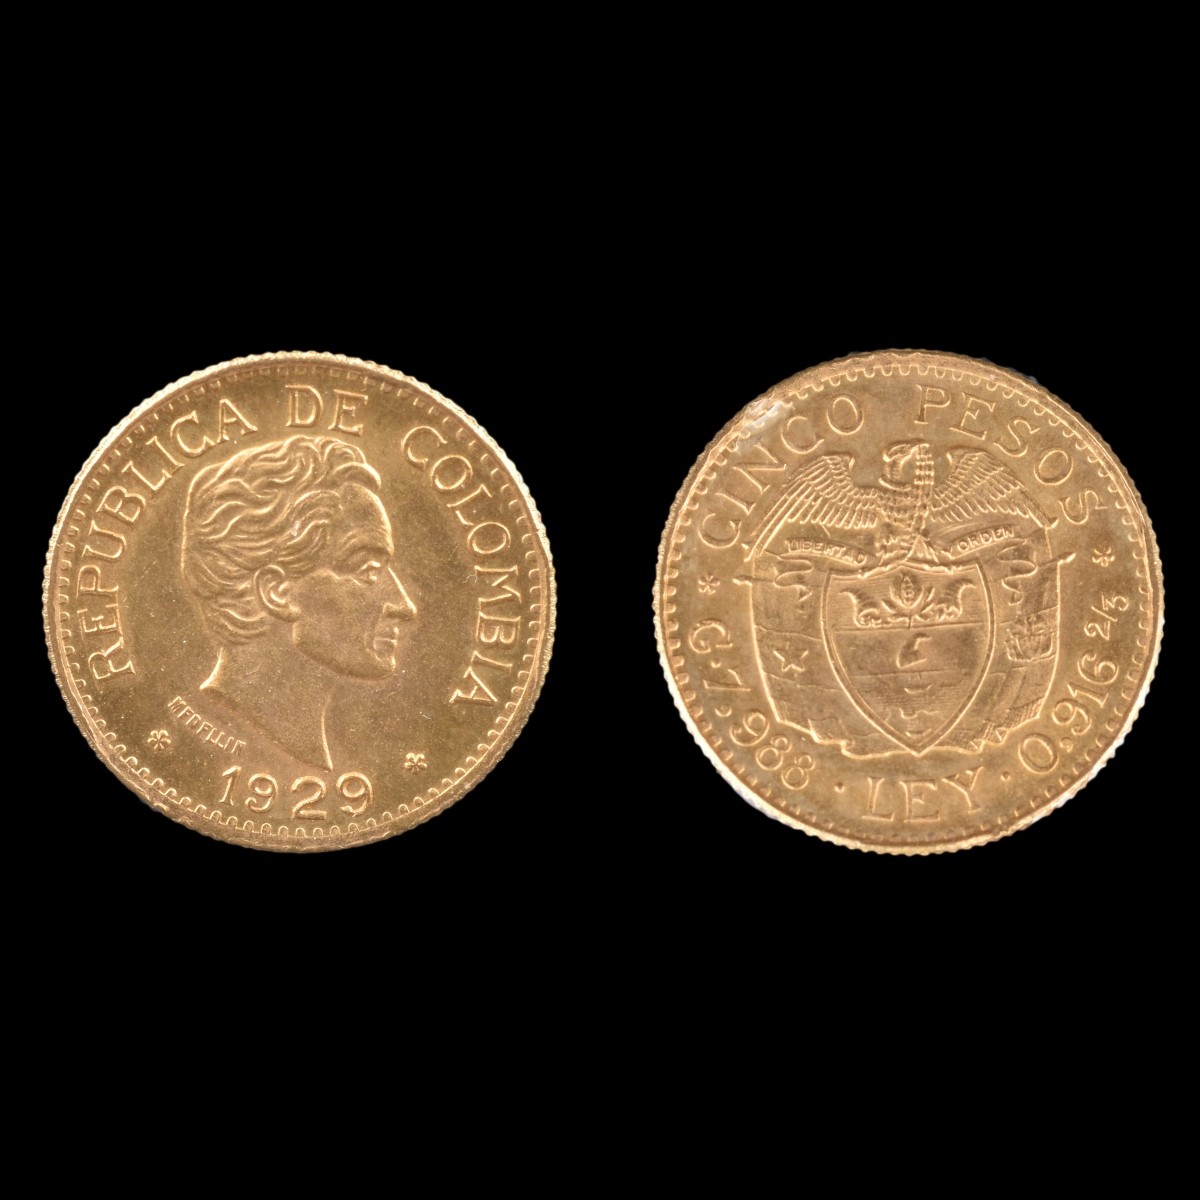 1929 Republic of Colombia Gold 5 Pesos